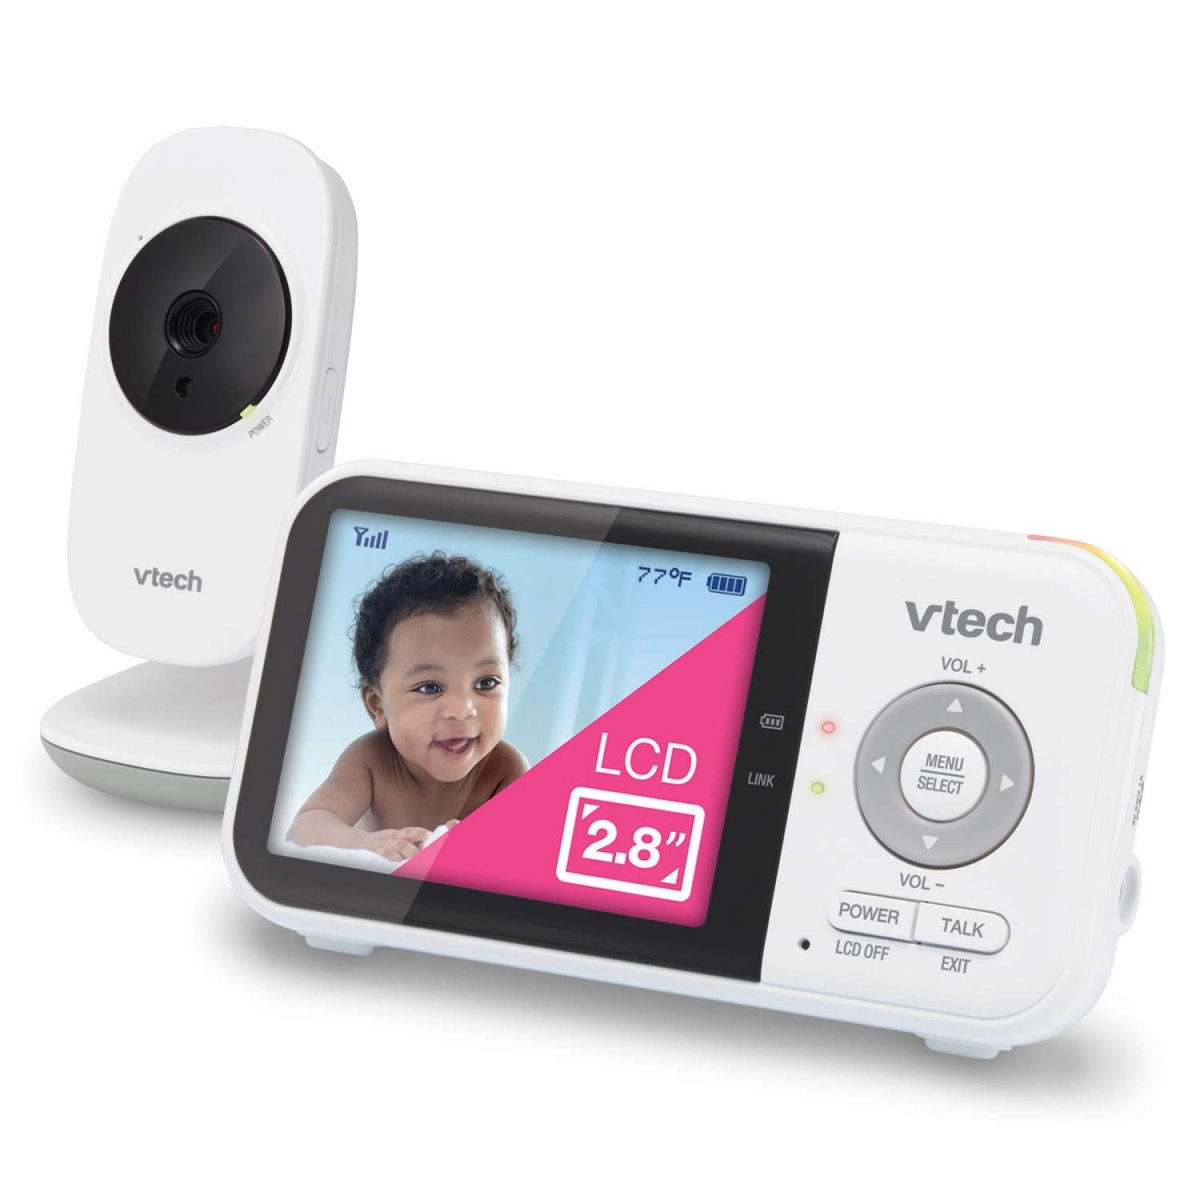 vtech vm819 video monitor review